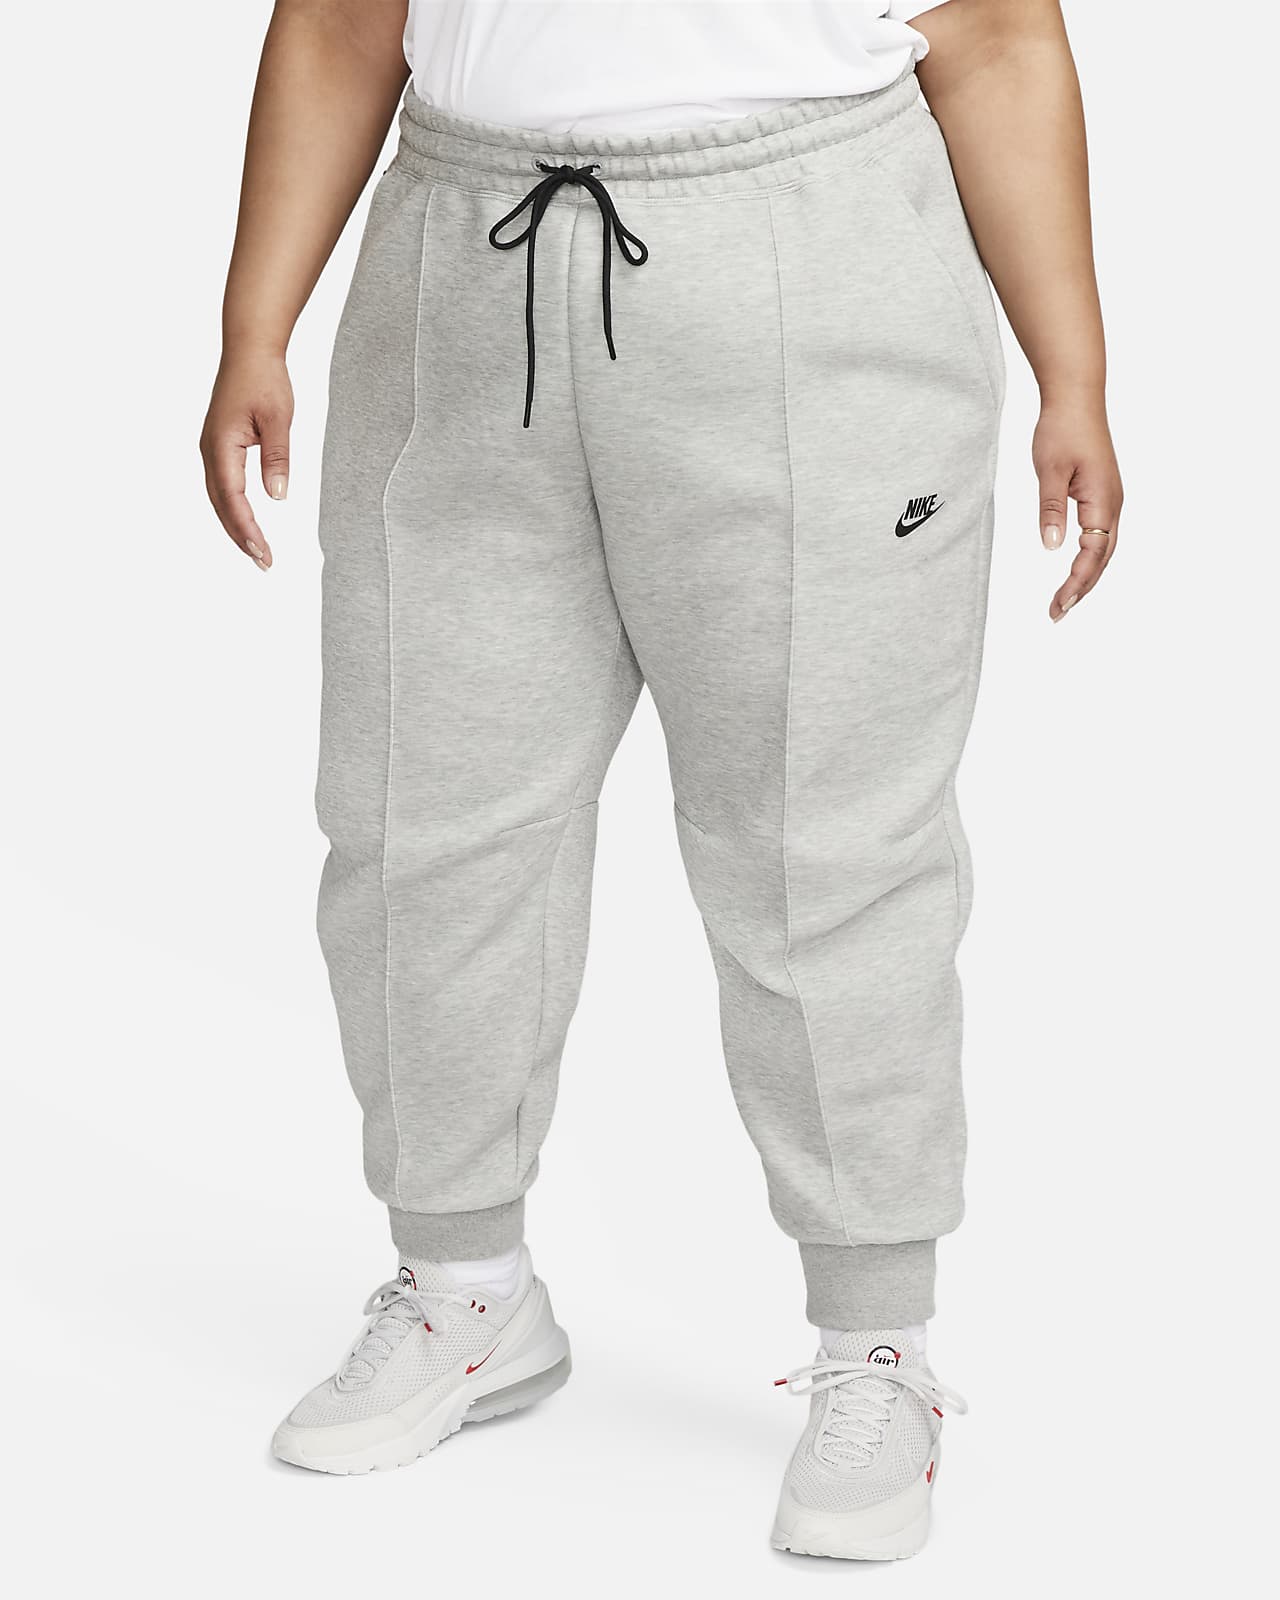 Calças desportivas de cintura normal Nike Sportswear Tech Fleece para mulher (Tamanhos grandes)